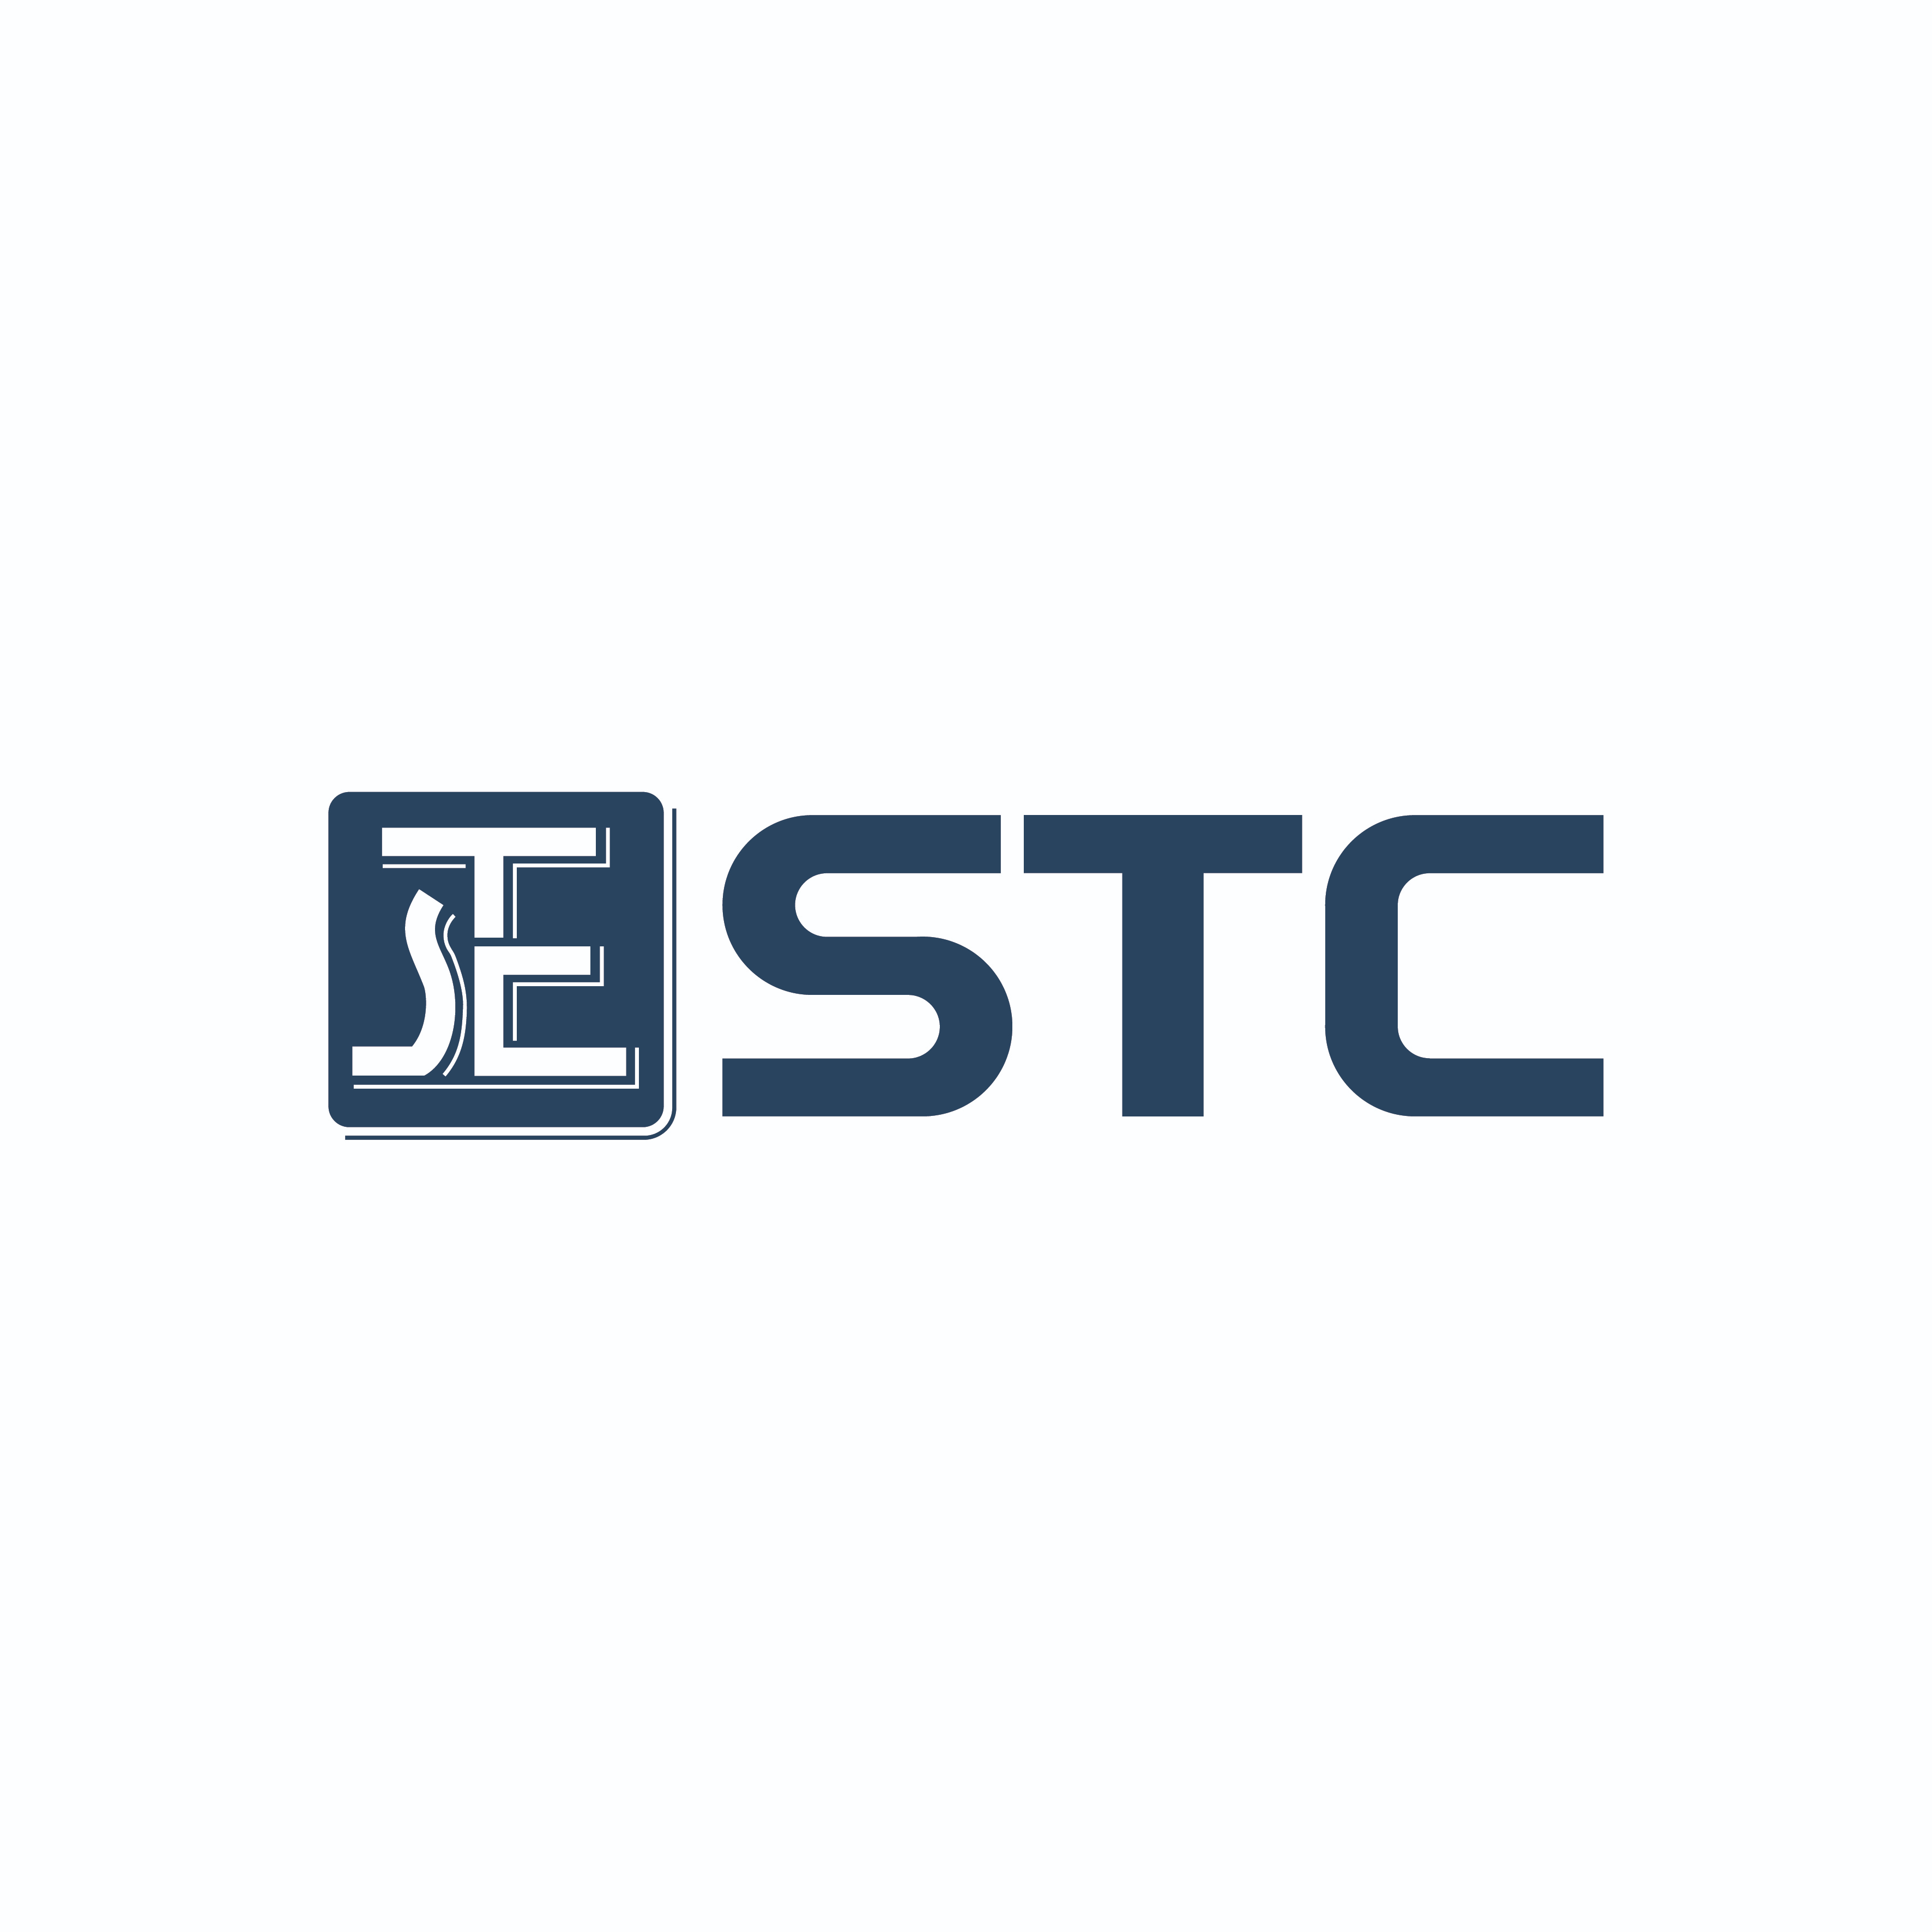 STC - Hong Kong Standards and Testing Centre logo